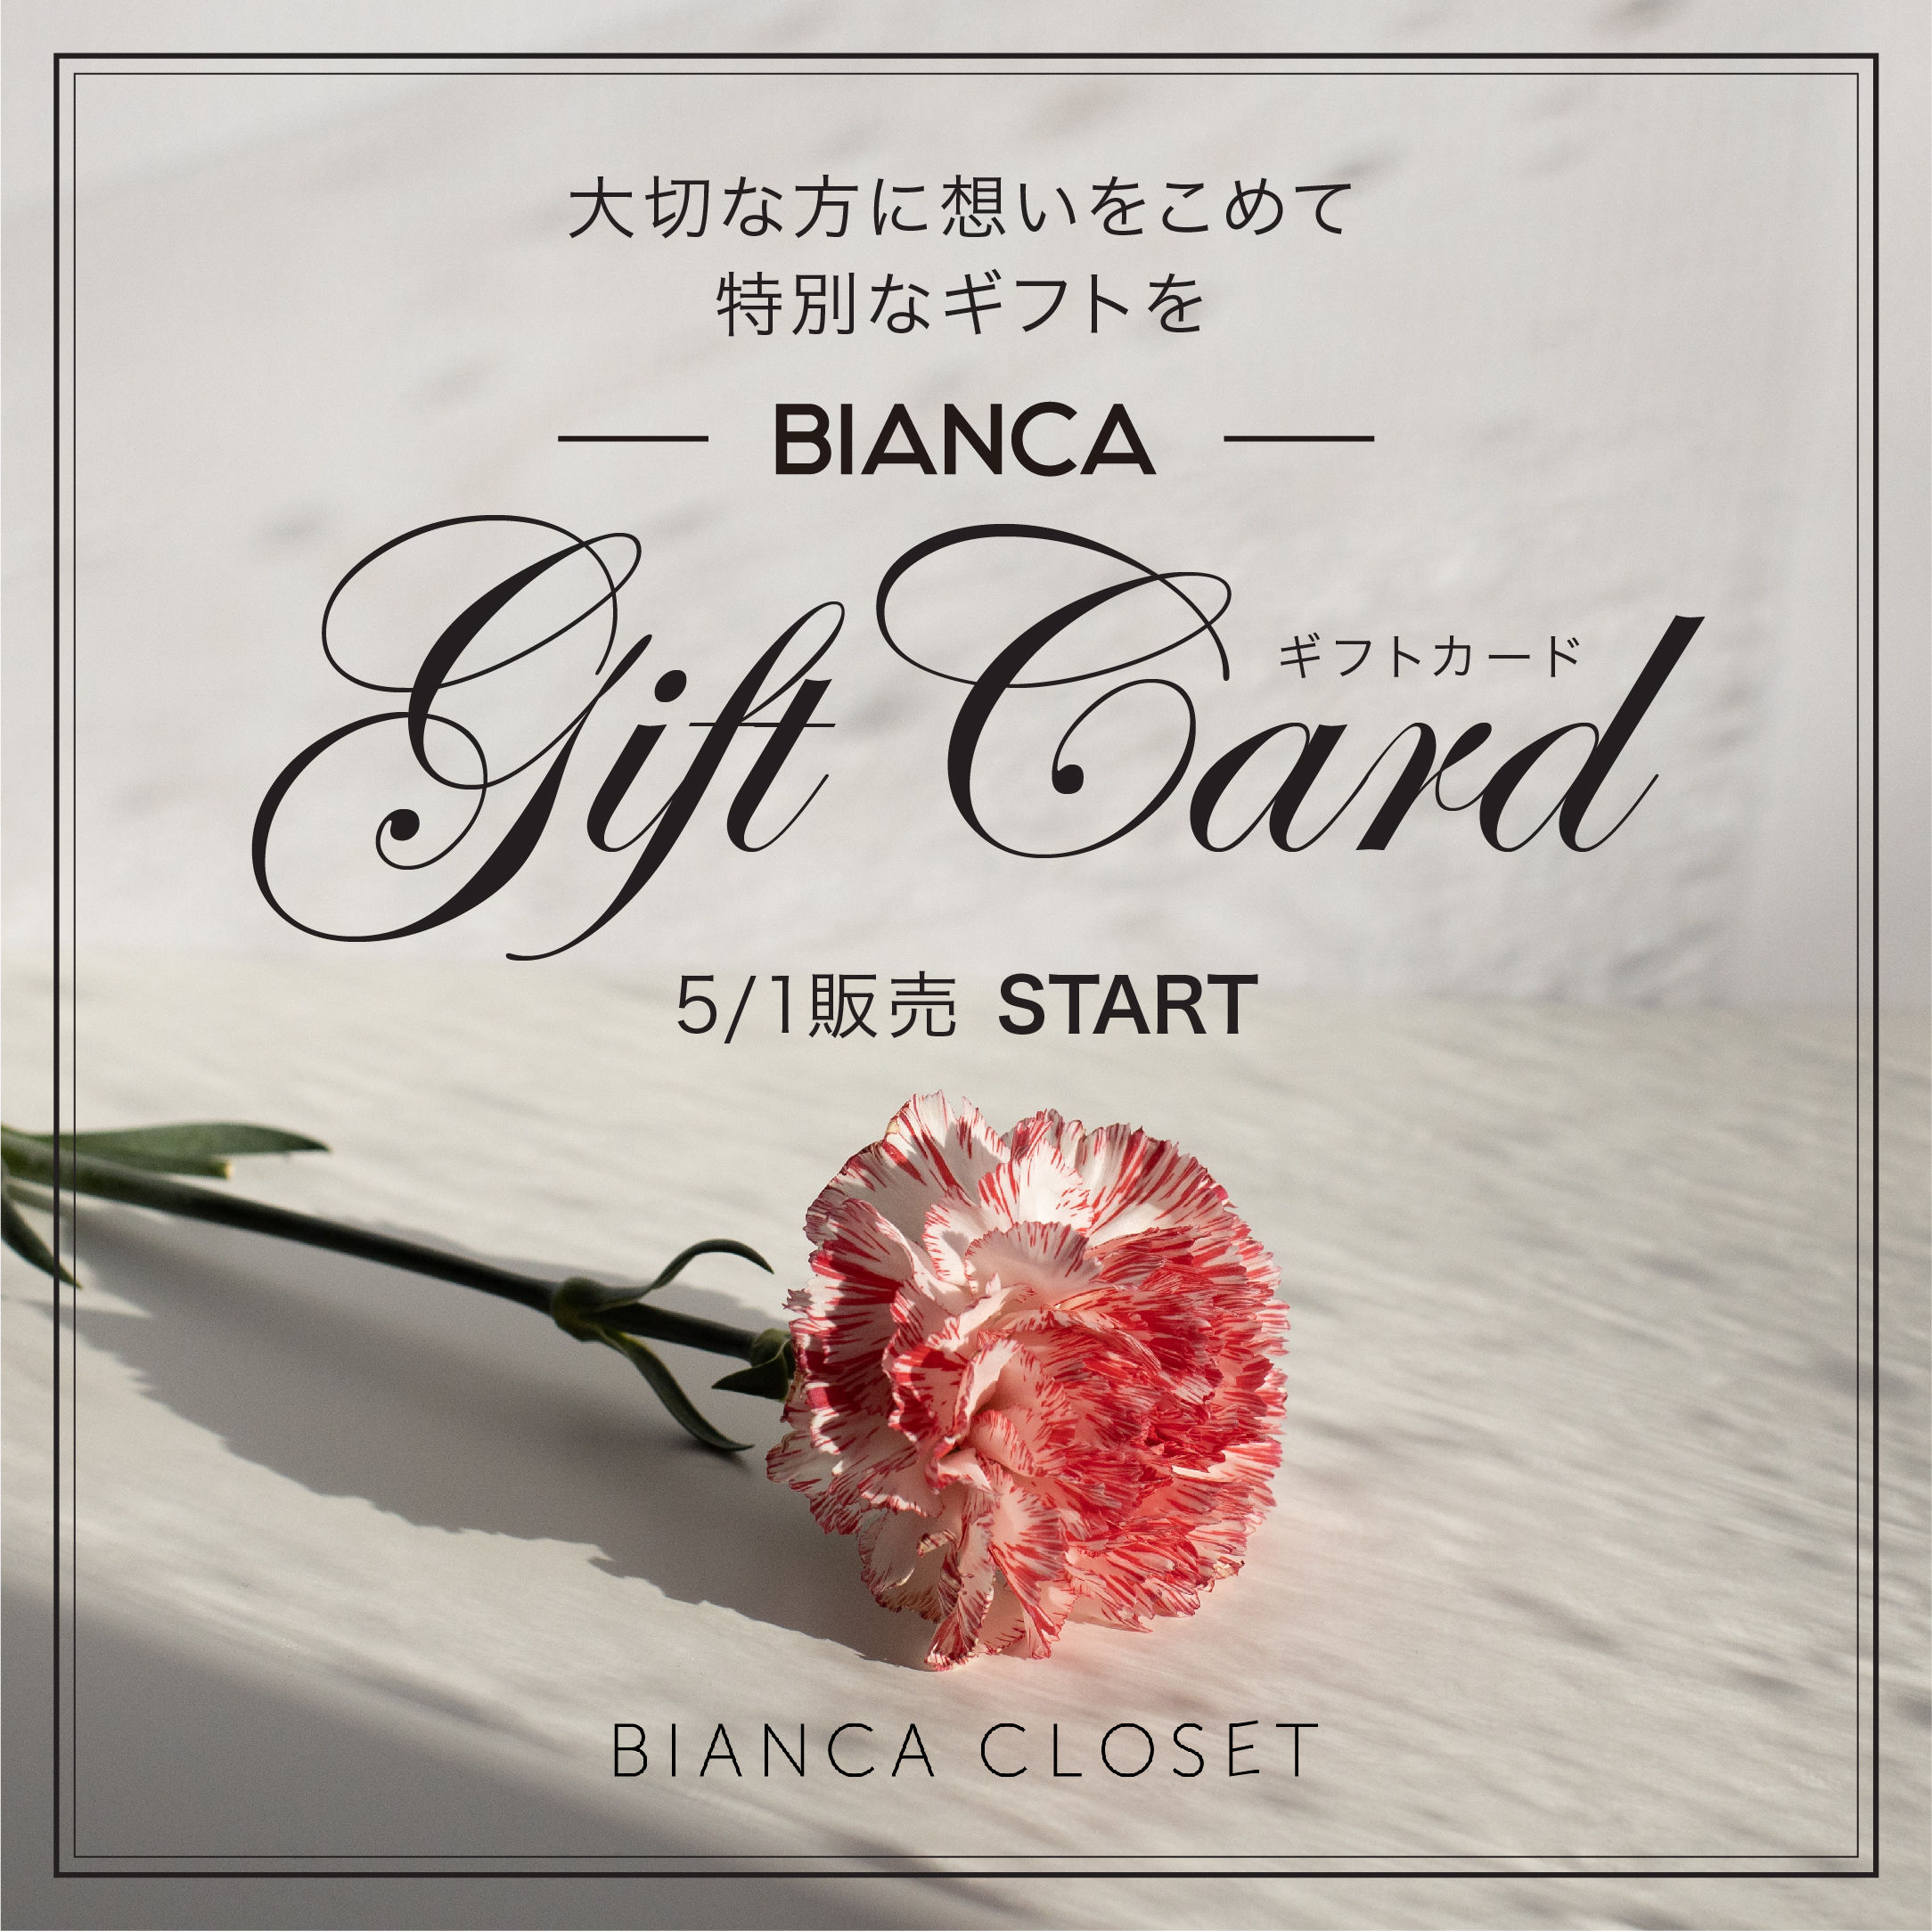 BIANCA GIFT CARD